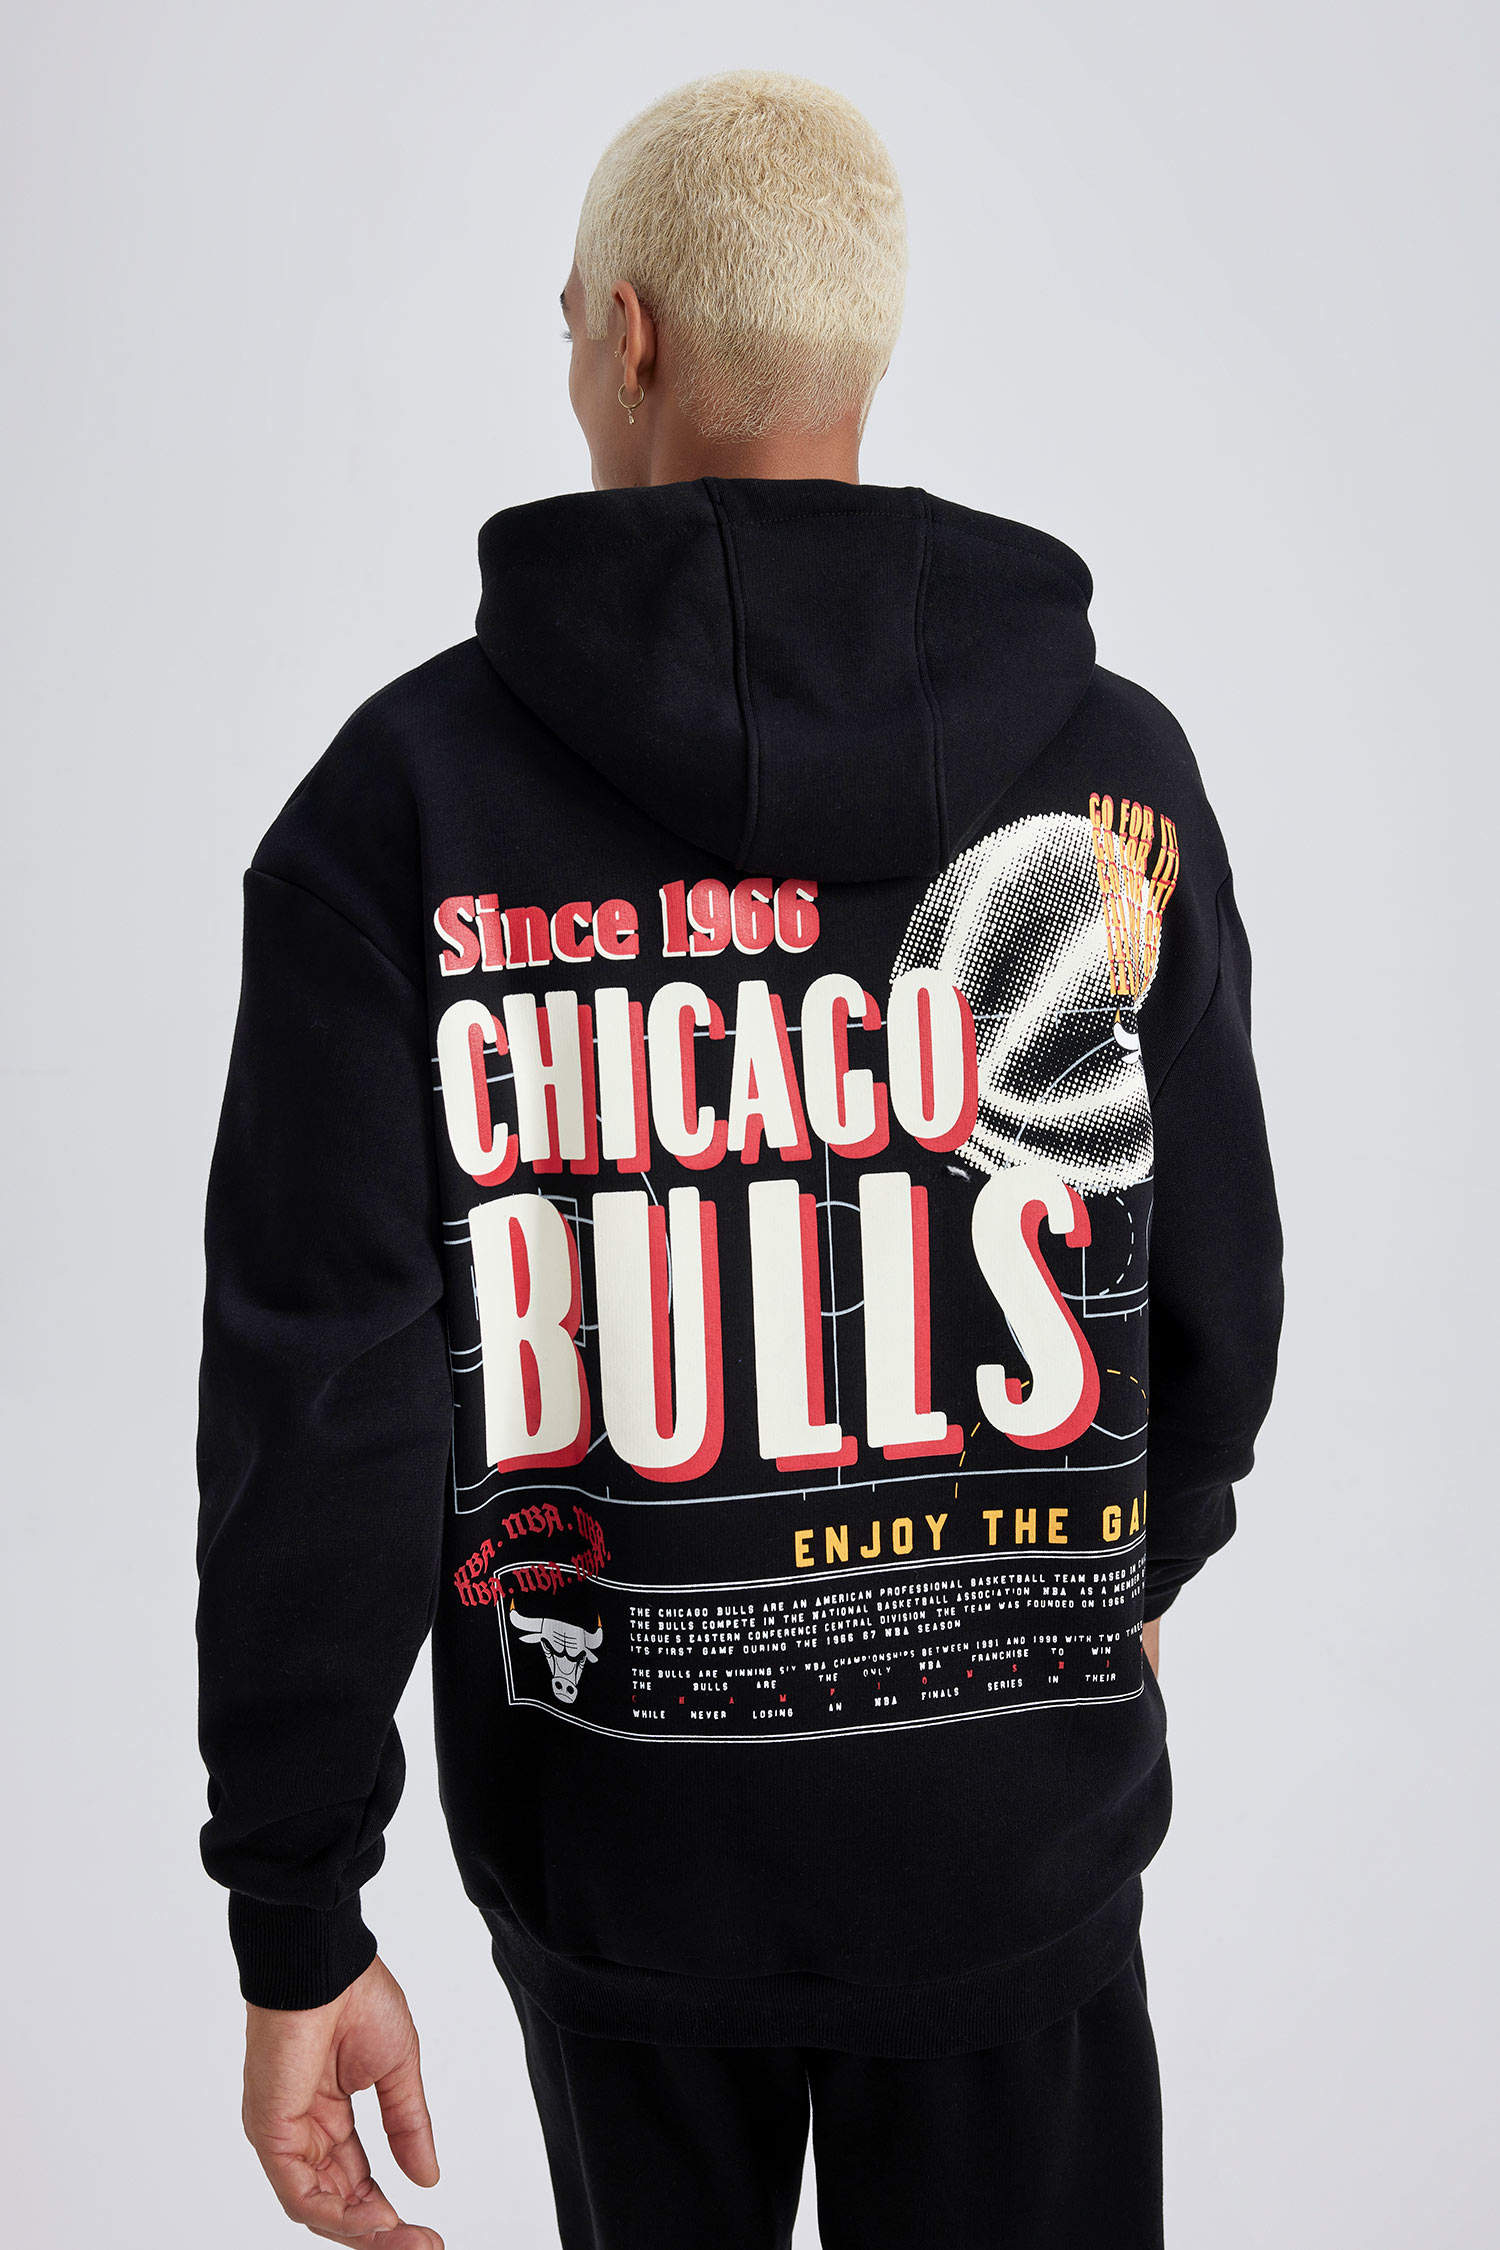 bulls sweatshirt